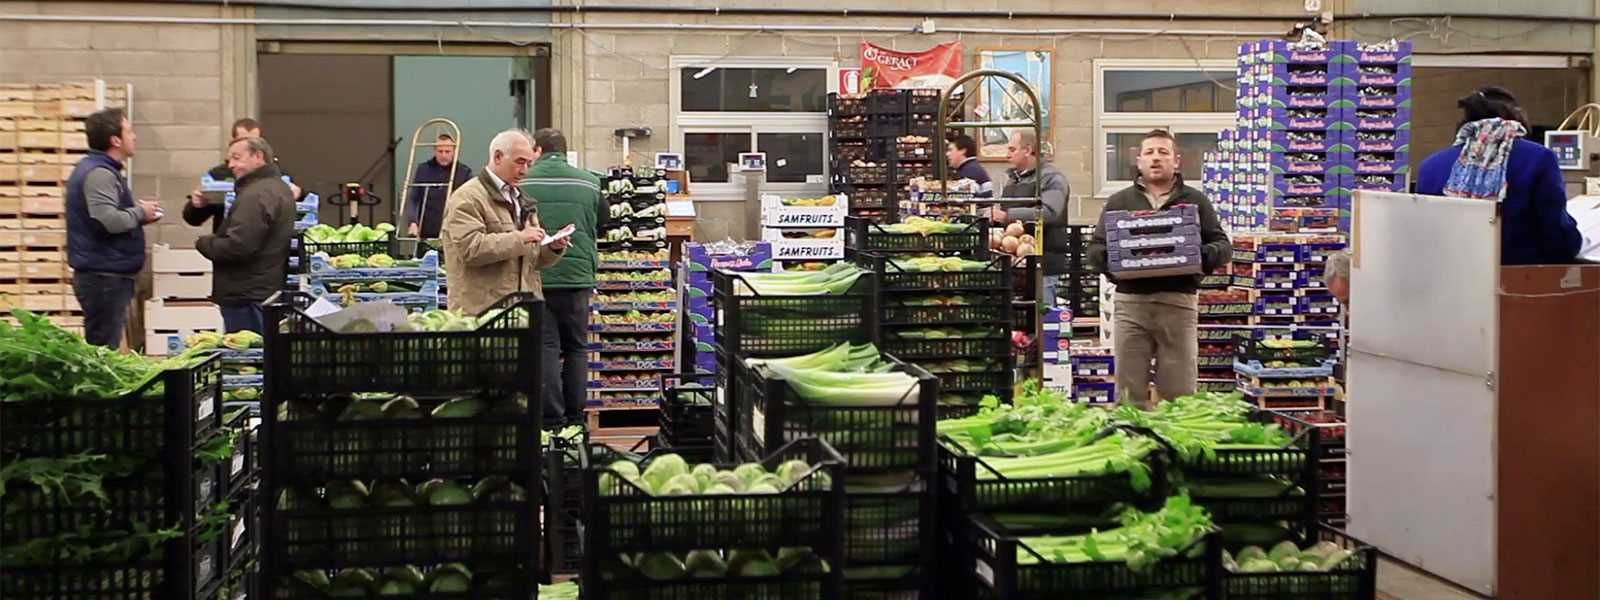 europa vegetable market management